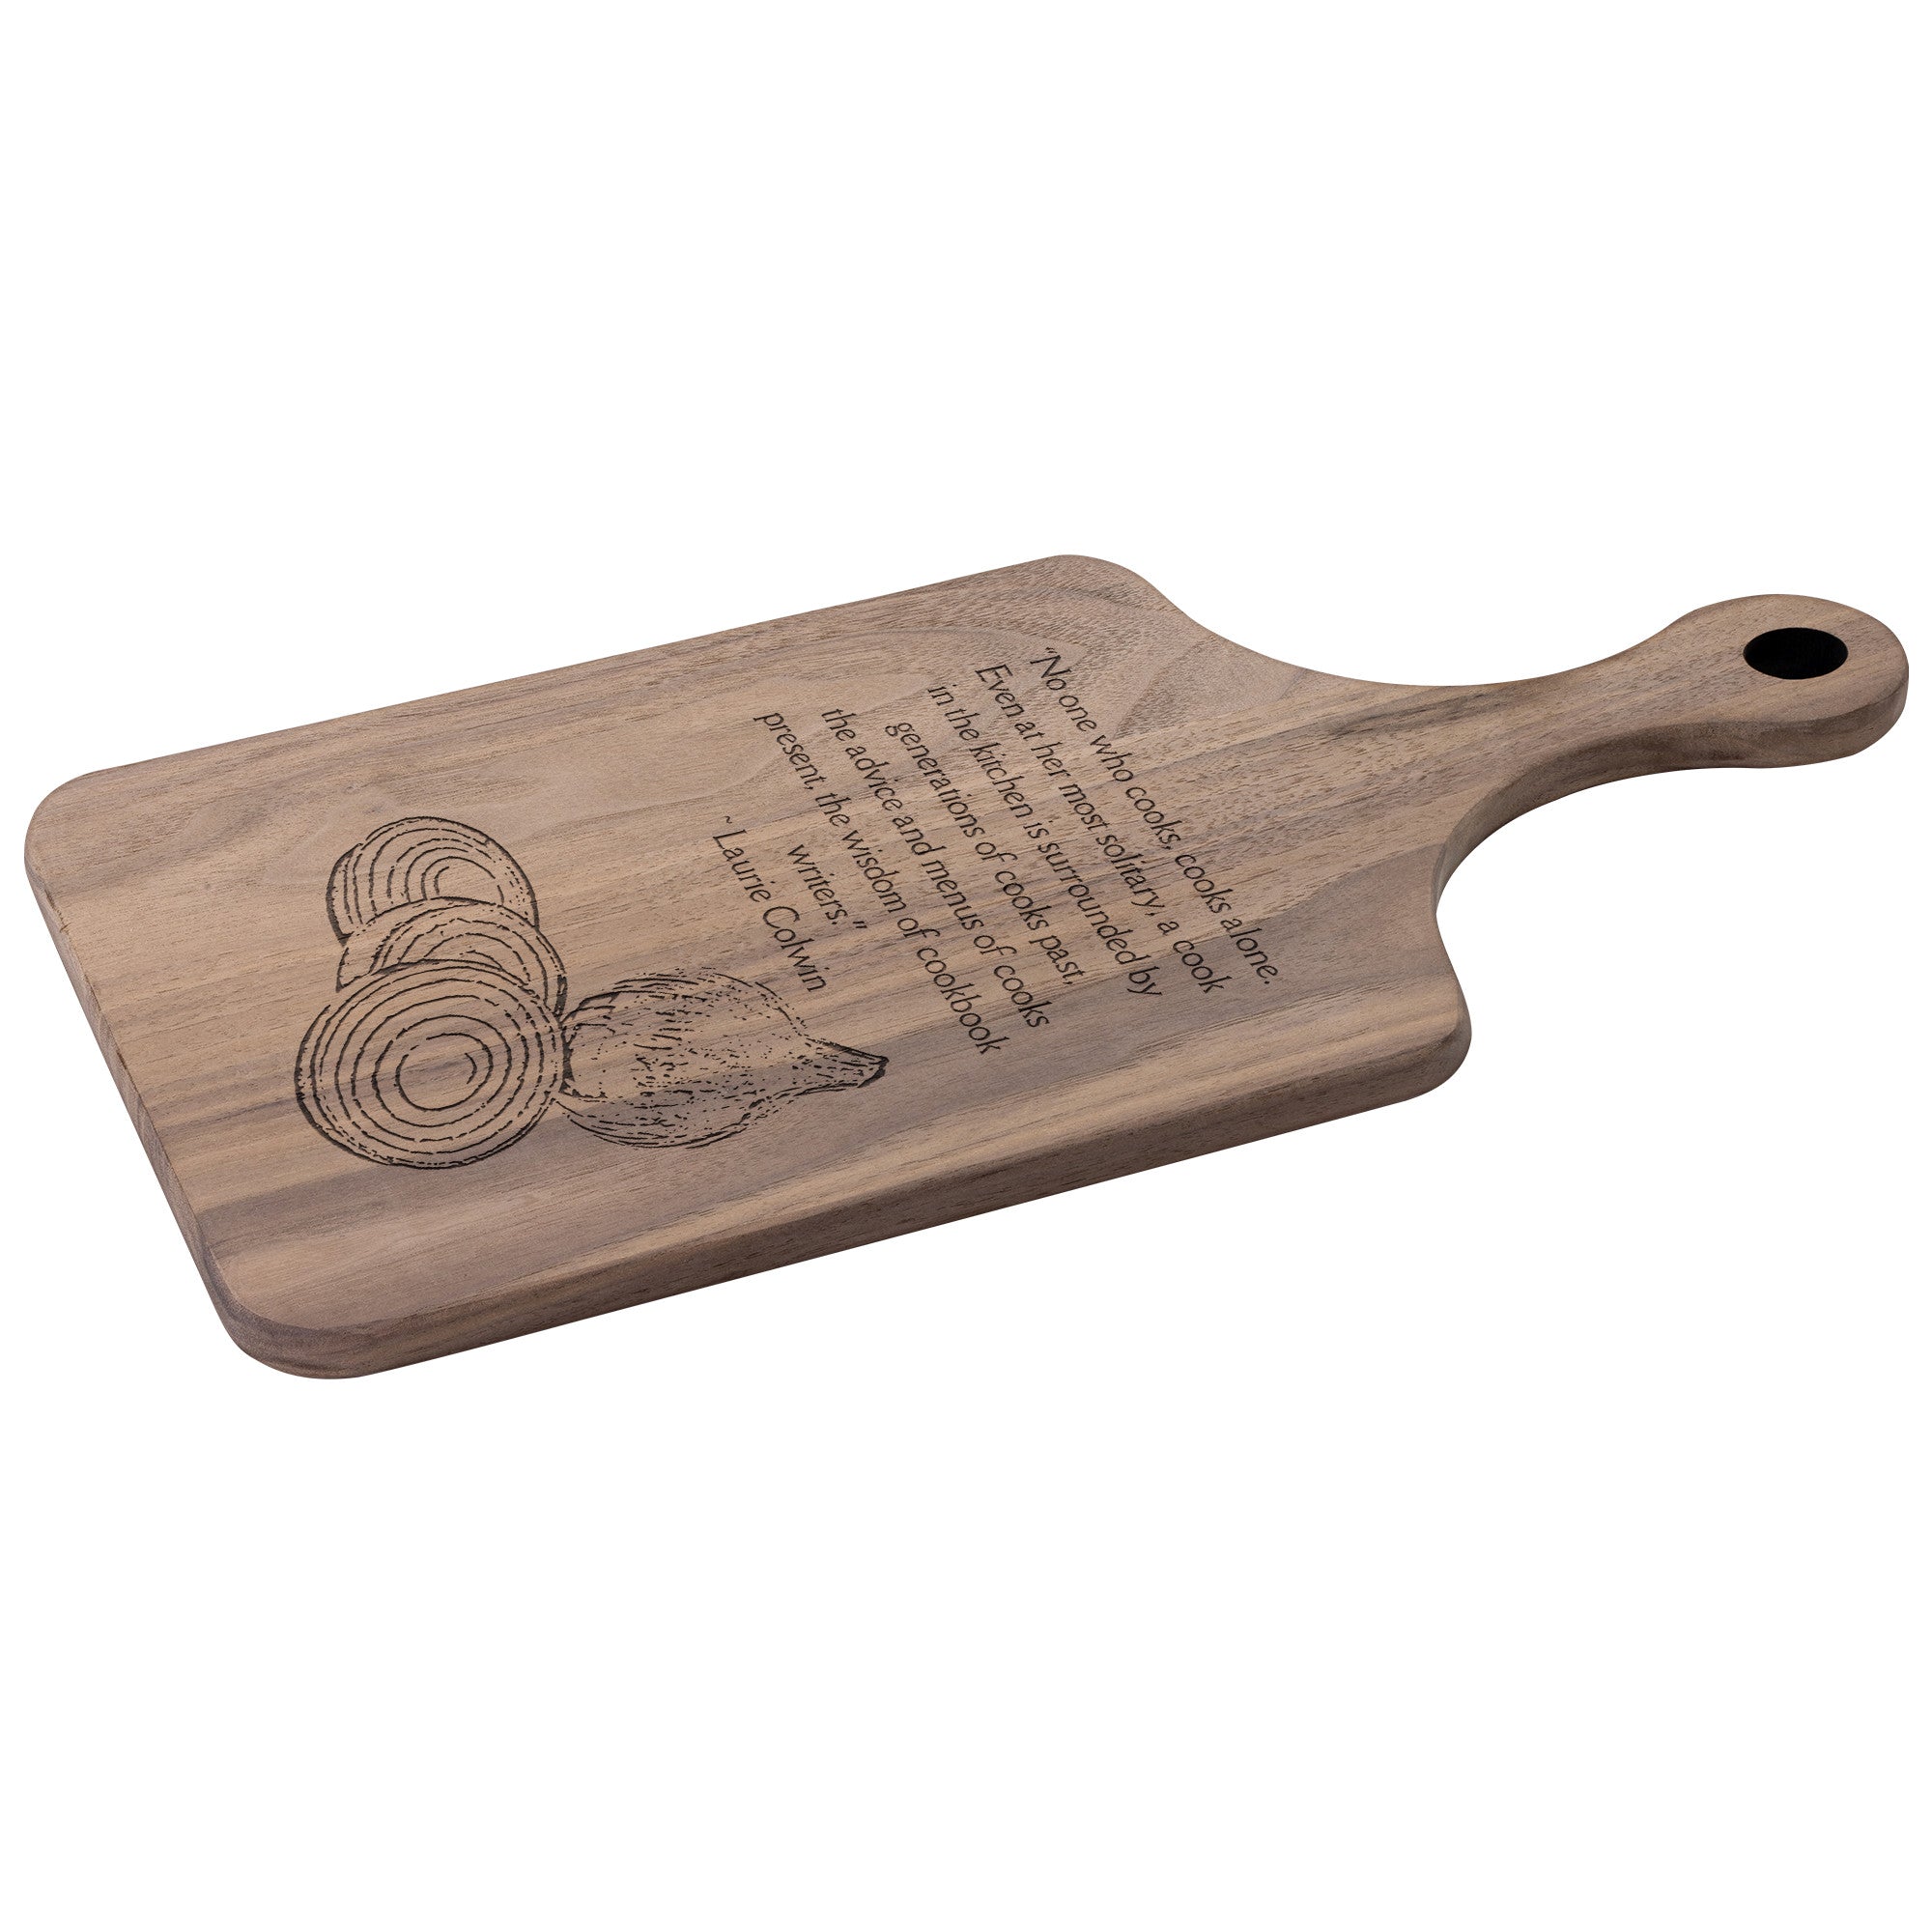 Hardwood Paddle Cutting Board - Variant 16